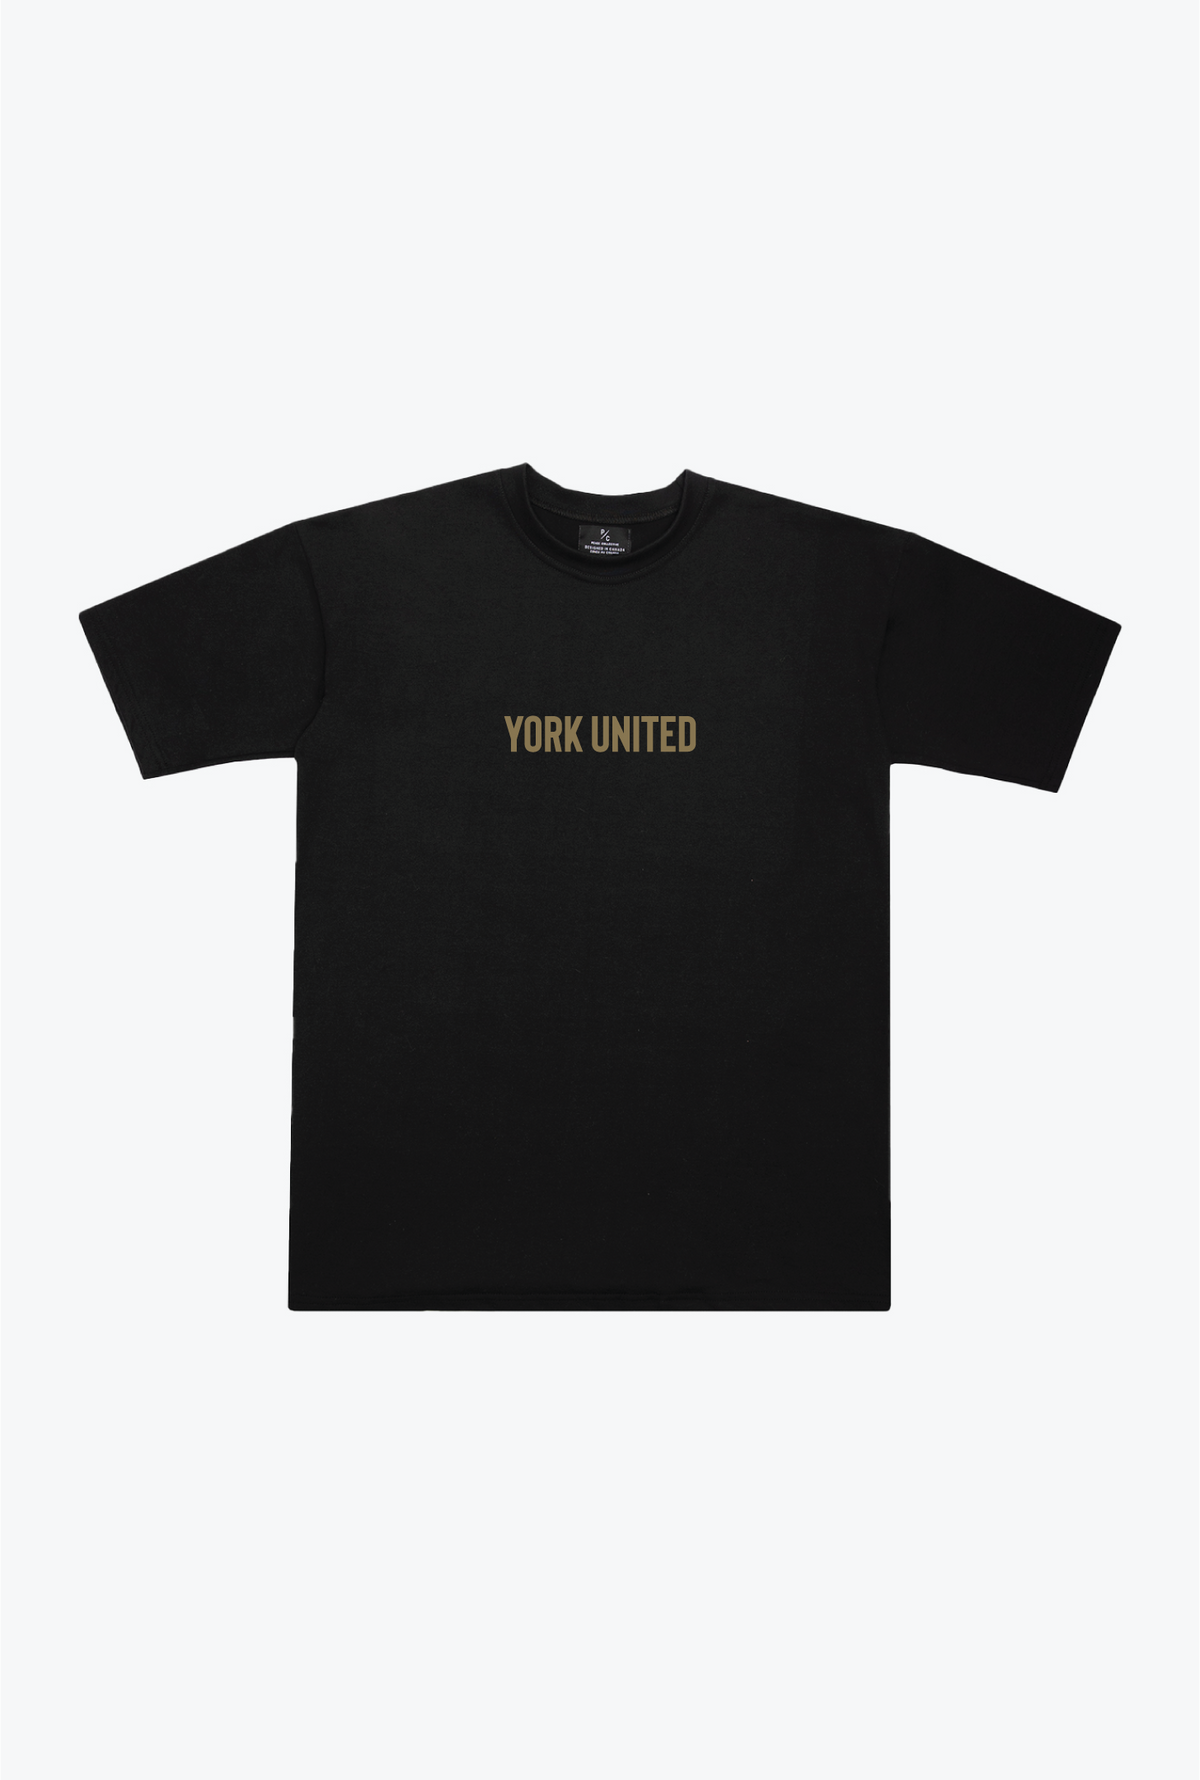 York United FC Heavyweight T-Shirt - Black